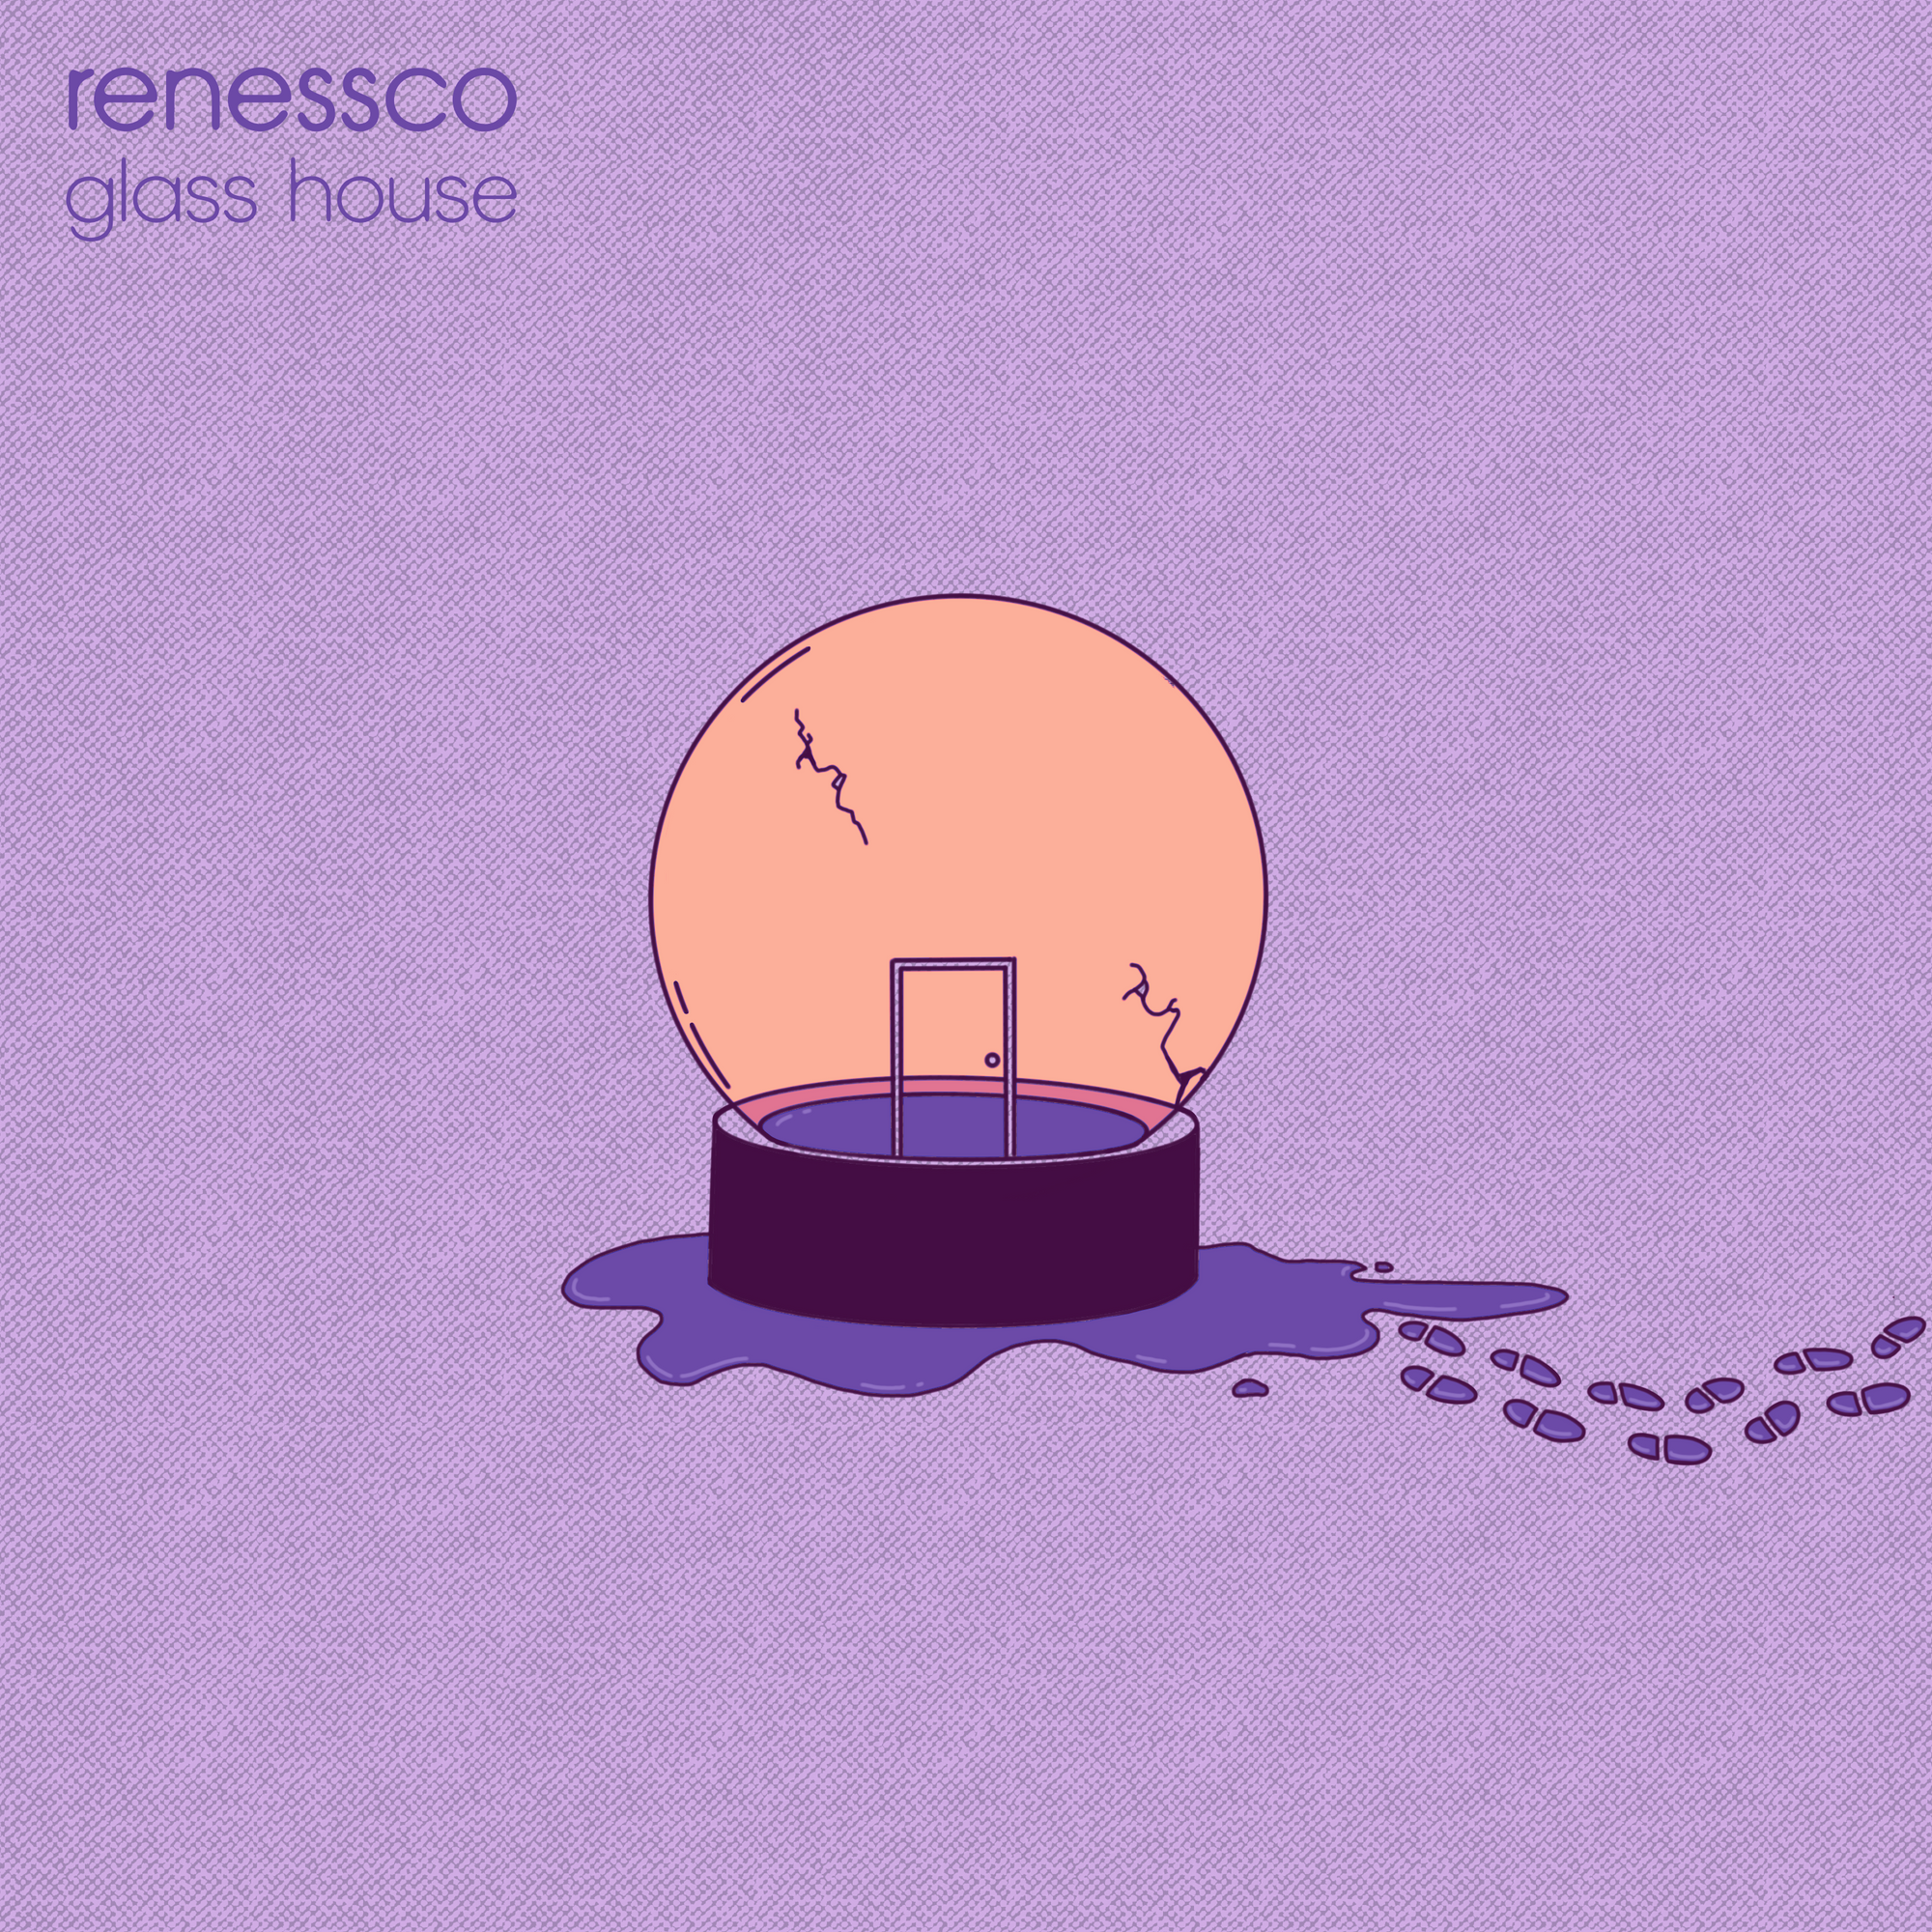 Renessco - 'Glass House'